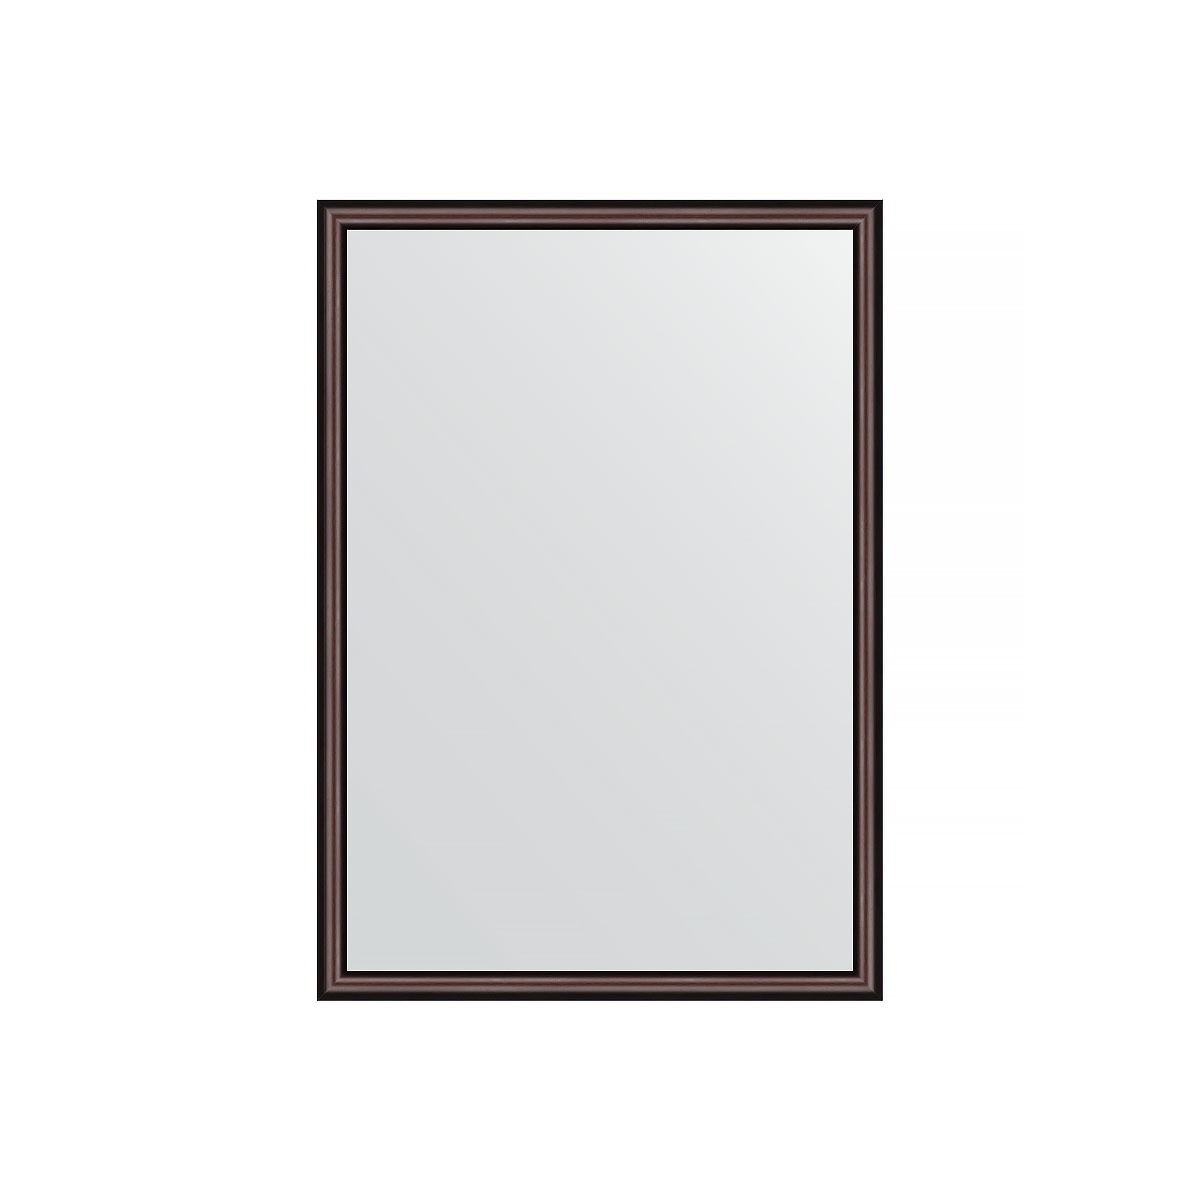 Зеркало в багетной раме Evoform махагон 22 мм 48х68 см зеркало 48х68 см сосна evoform definite by 0618